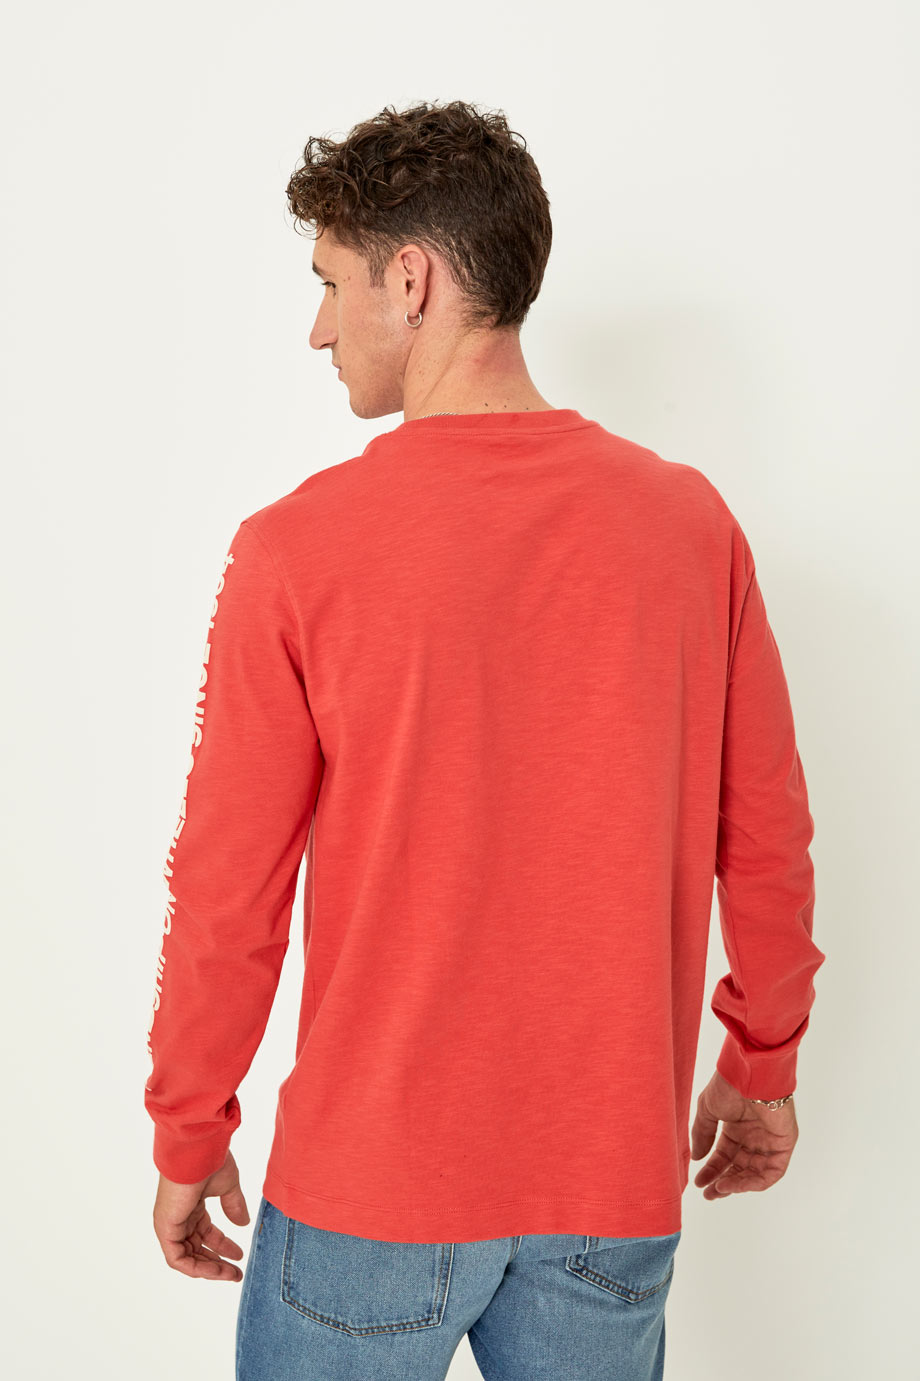 Camiseta manga larga Friendship (Rojo) – CLICE BARCELONA